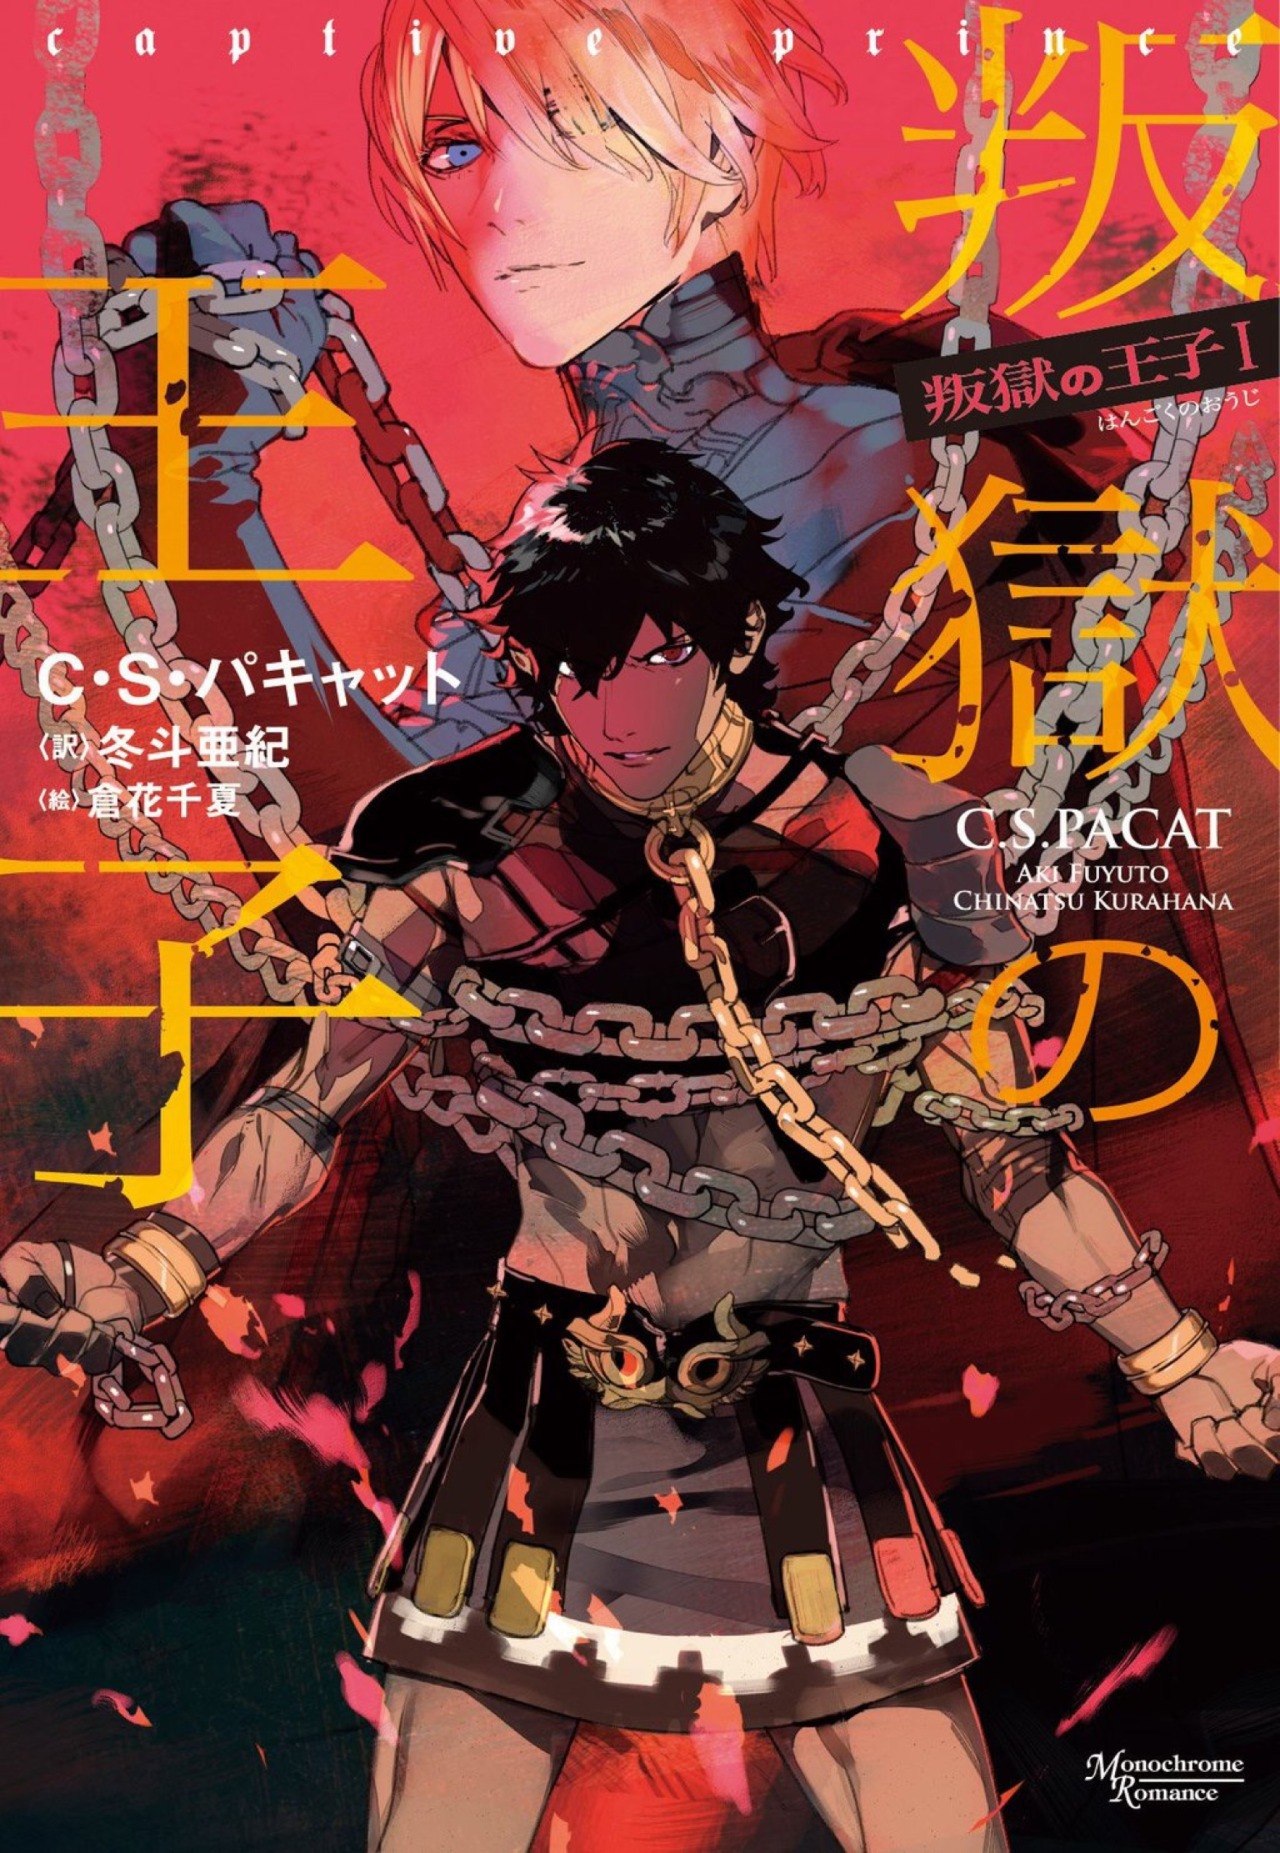 Captive Prince Series - official book covers: Japanese: artist - Chinatsu Kurahana; Taiwanese: ...